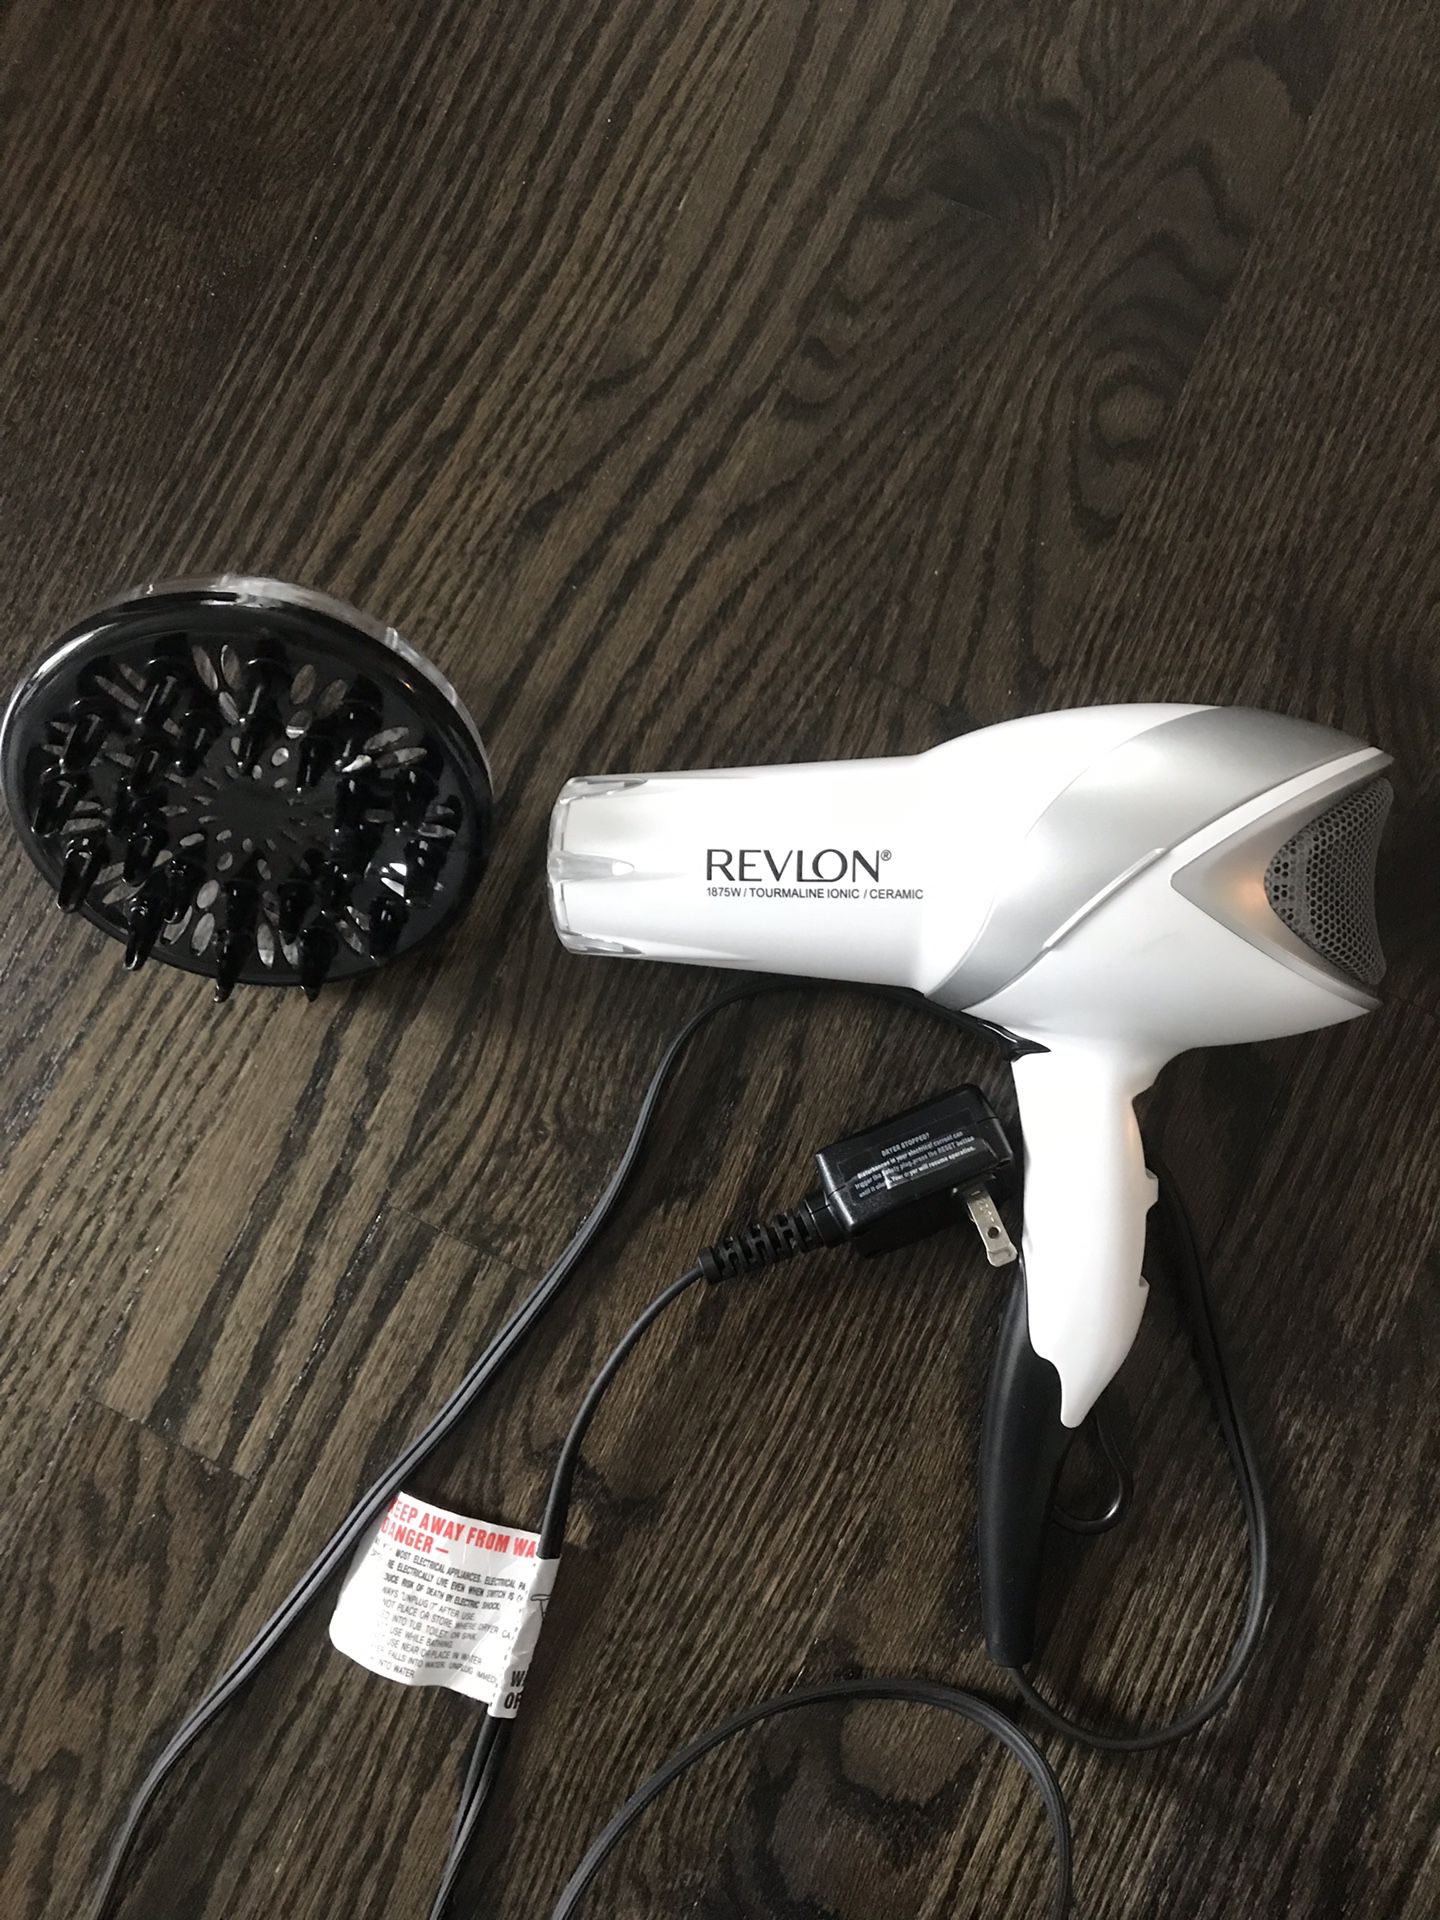 Revlon hair dryer